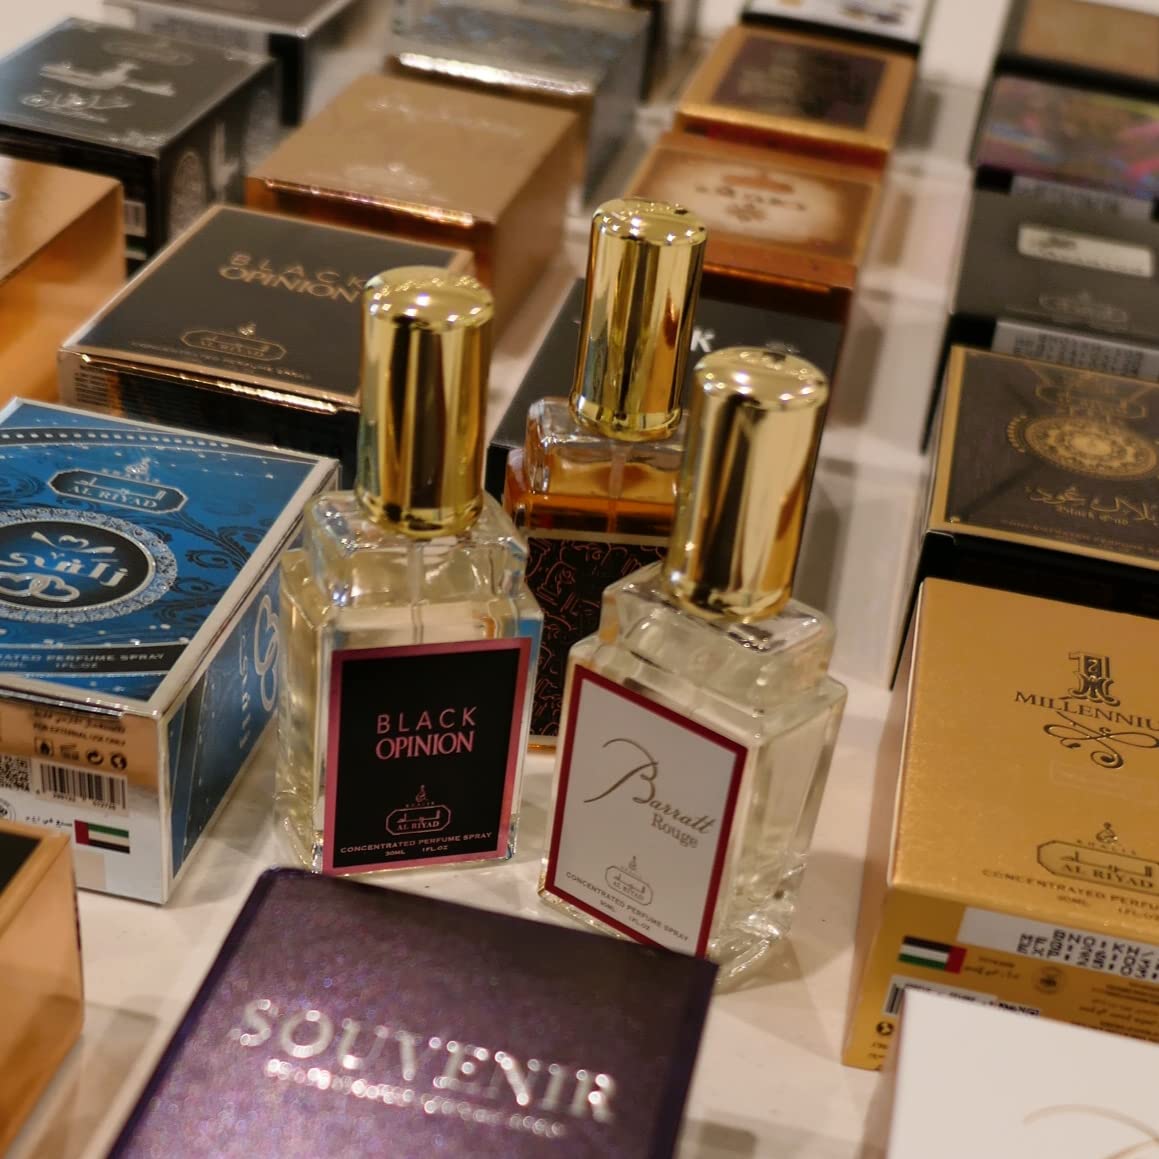 SILVER MONTALE Inspired by Creed Silver Mountain, 1.1 oz (30 mL) Eau De Parfum Spray, a fragrance that will leave a lasting impression by House of AL RIYAD Dubai